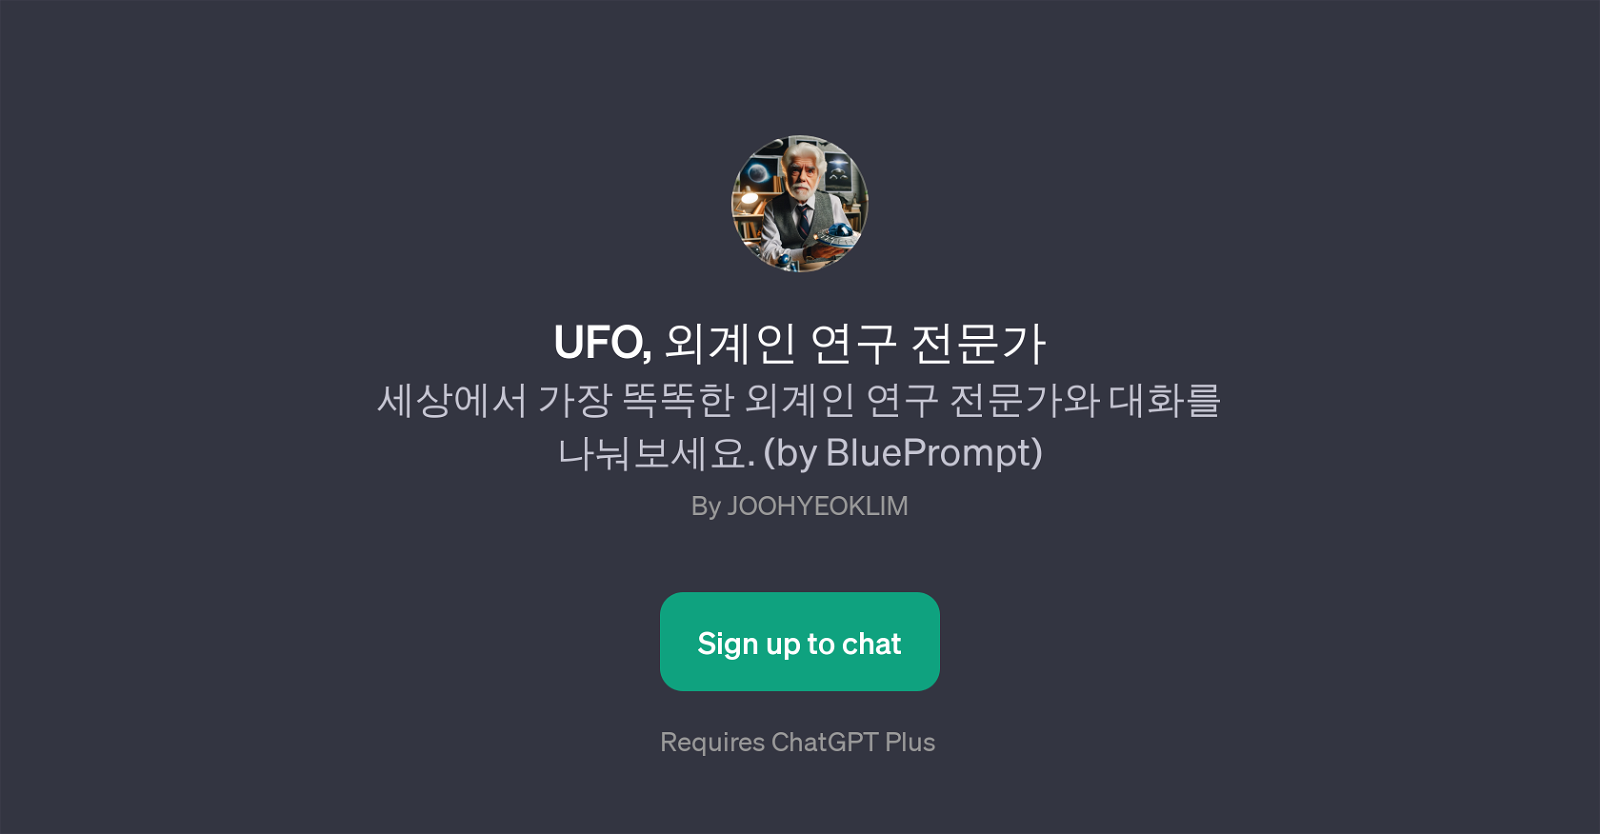 UFO, website